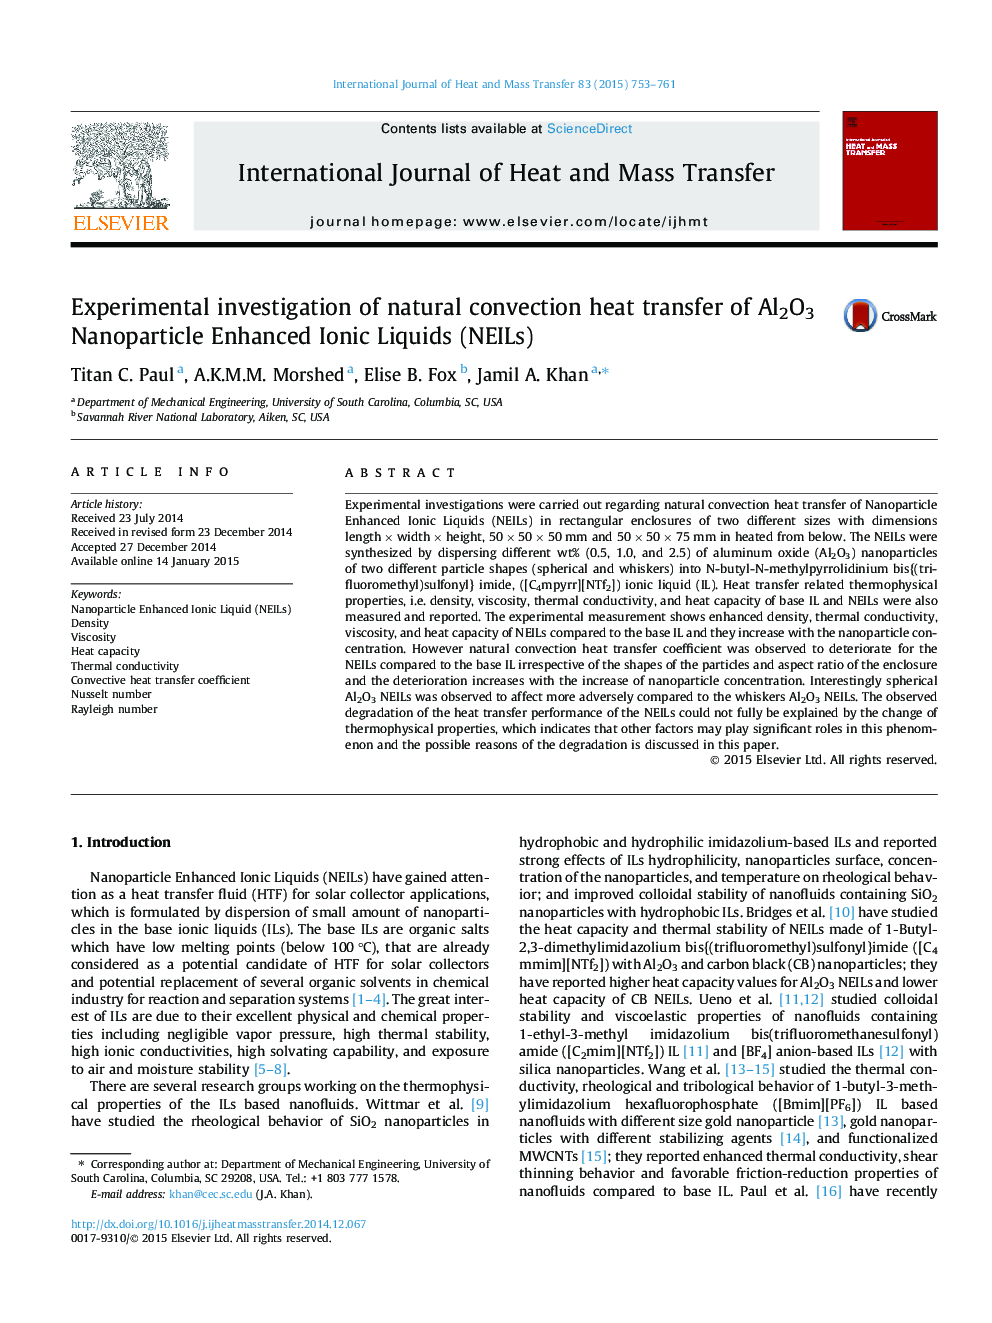 Experimental investigation of natural convection heat transfer of Al2O3 Nanoparticle Enhanced Ionic Liquids (NEILs)